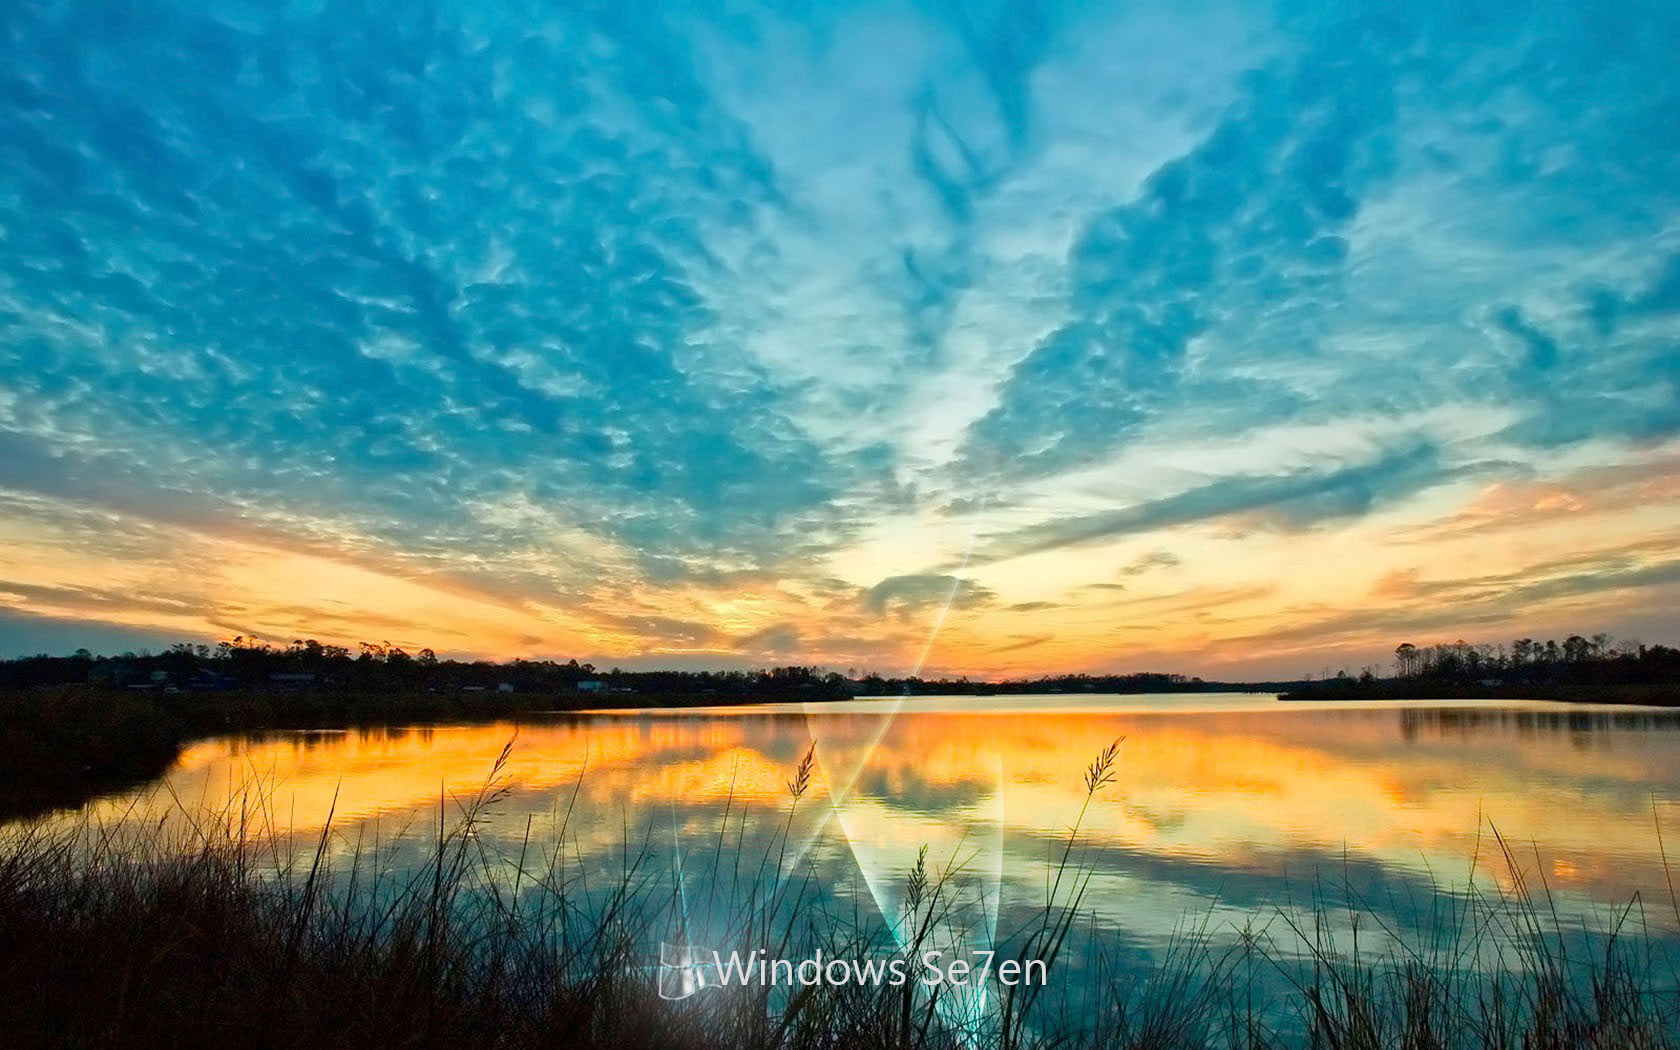 Desktop Windows 7 64 bit HD Wallpaper in high resolution for free